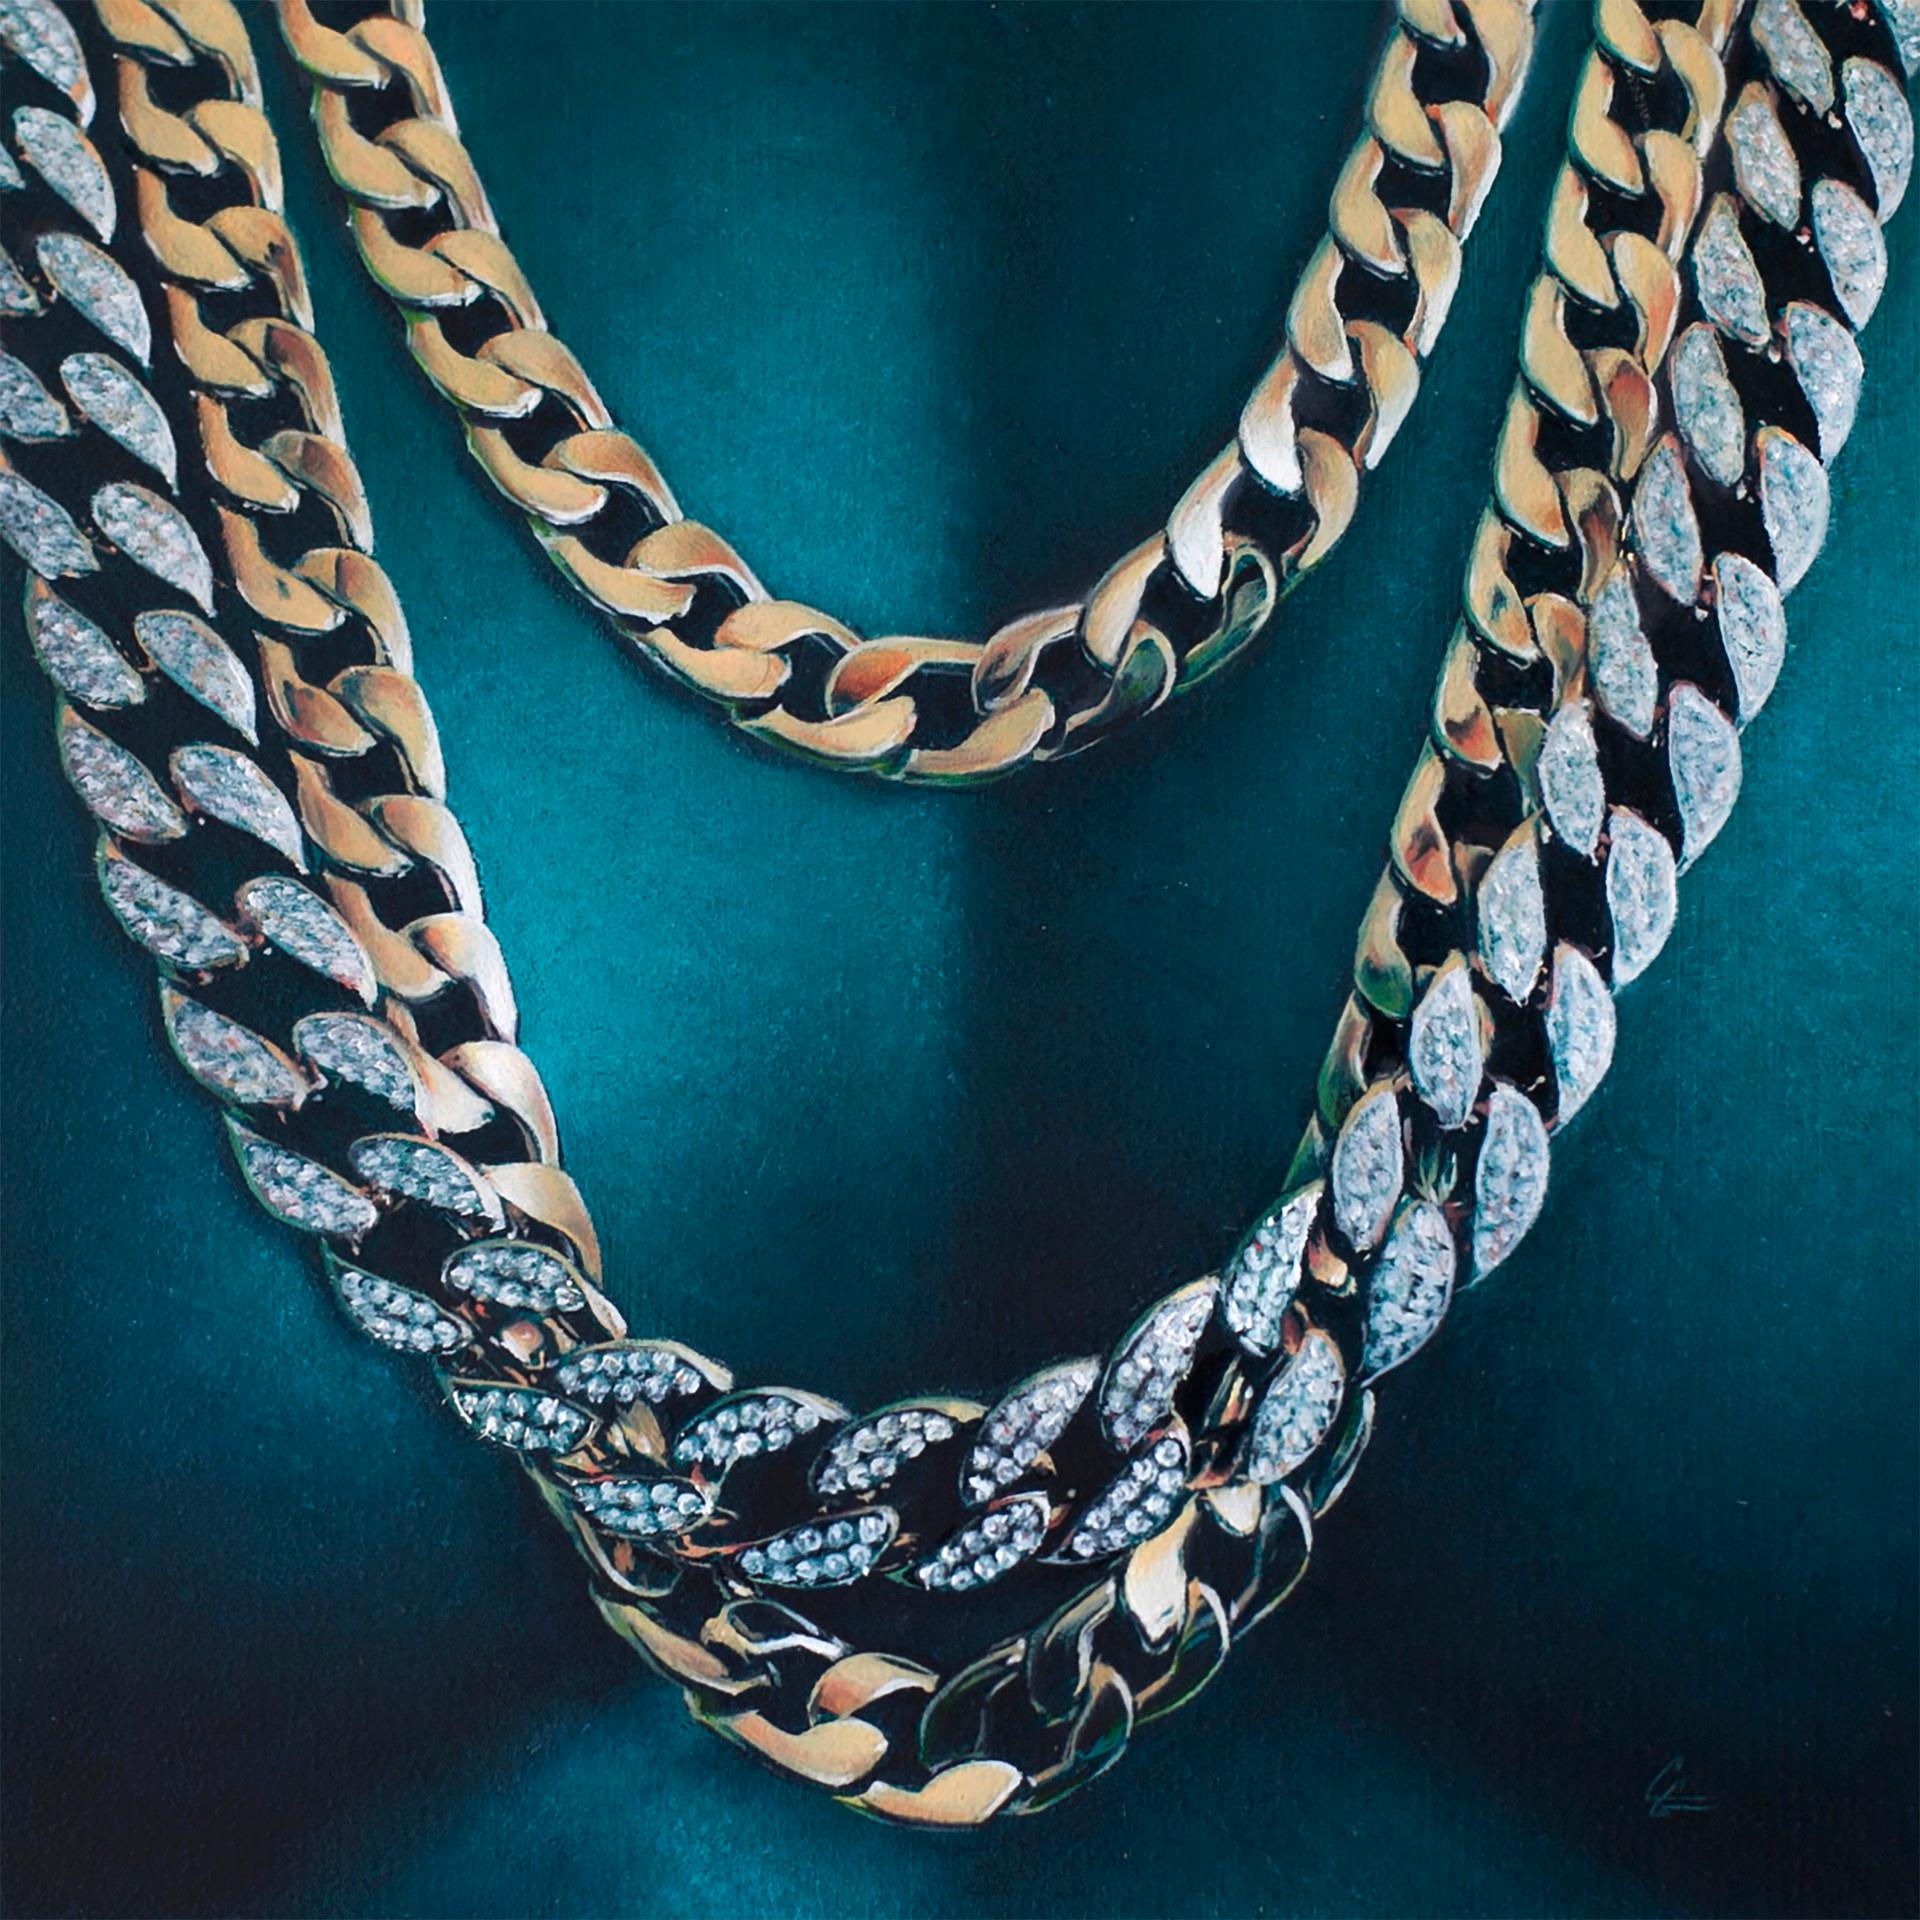 Chainz - Art by Grant Gilsdorf